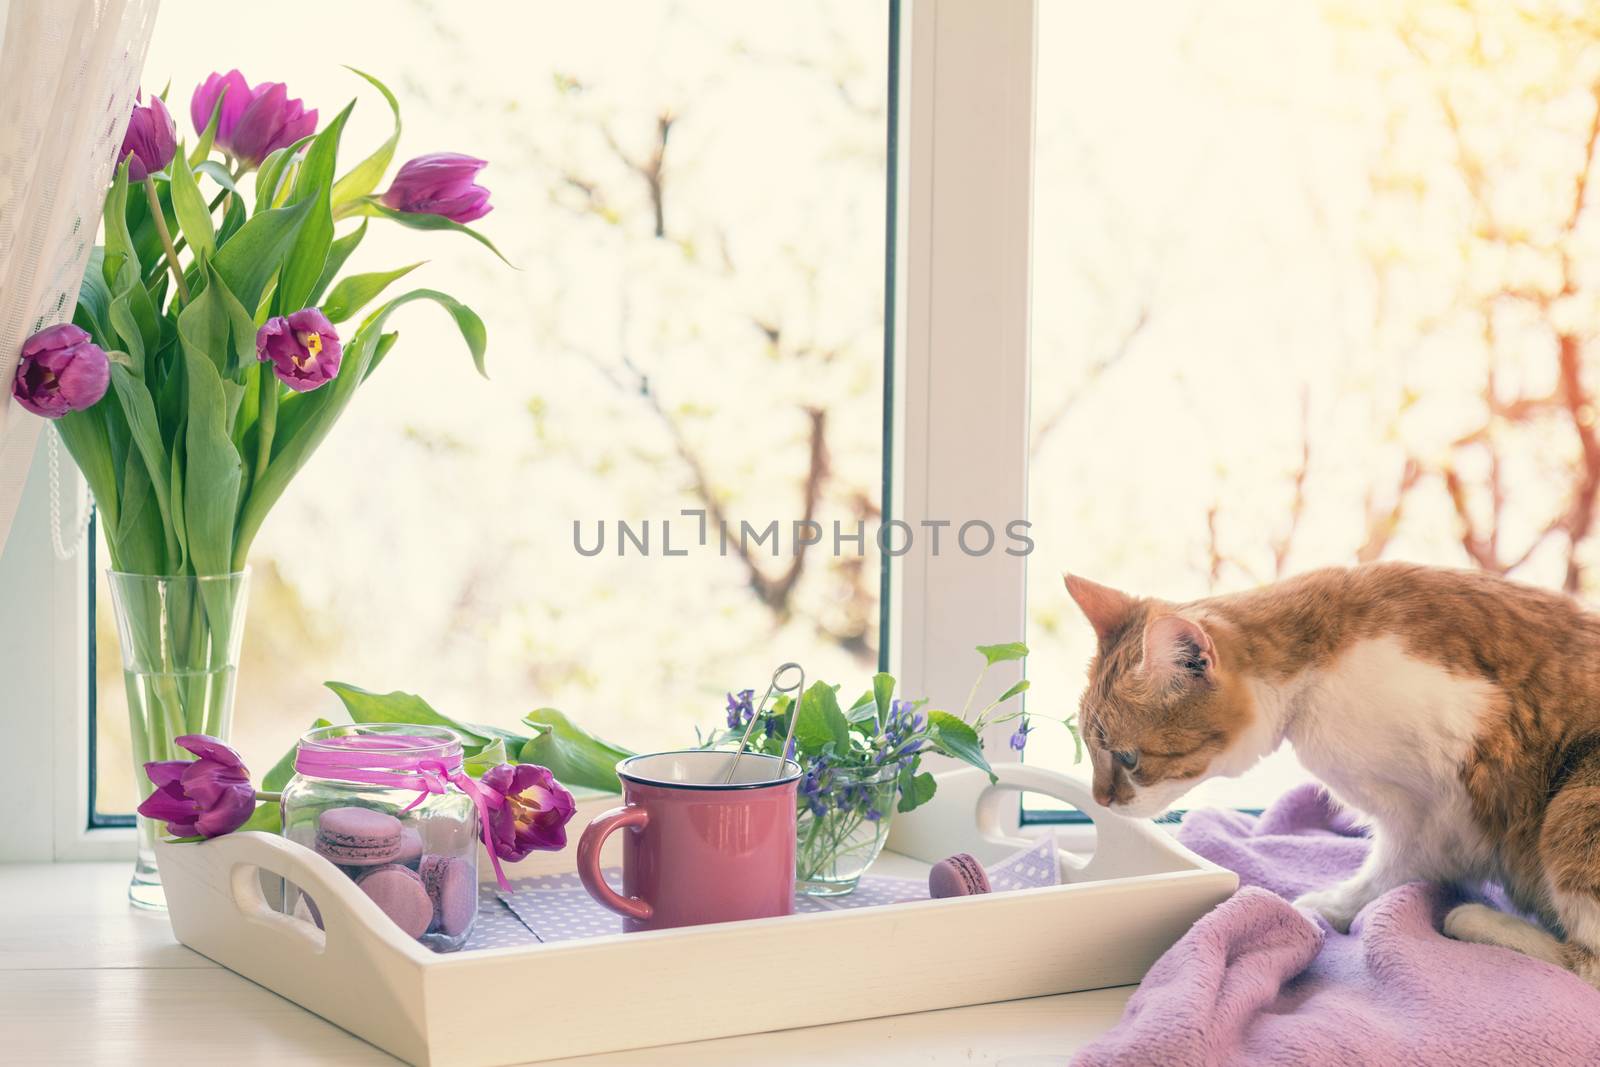 Violet sunshine cozy home concept by ArtSvitlyna